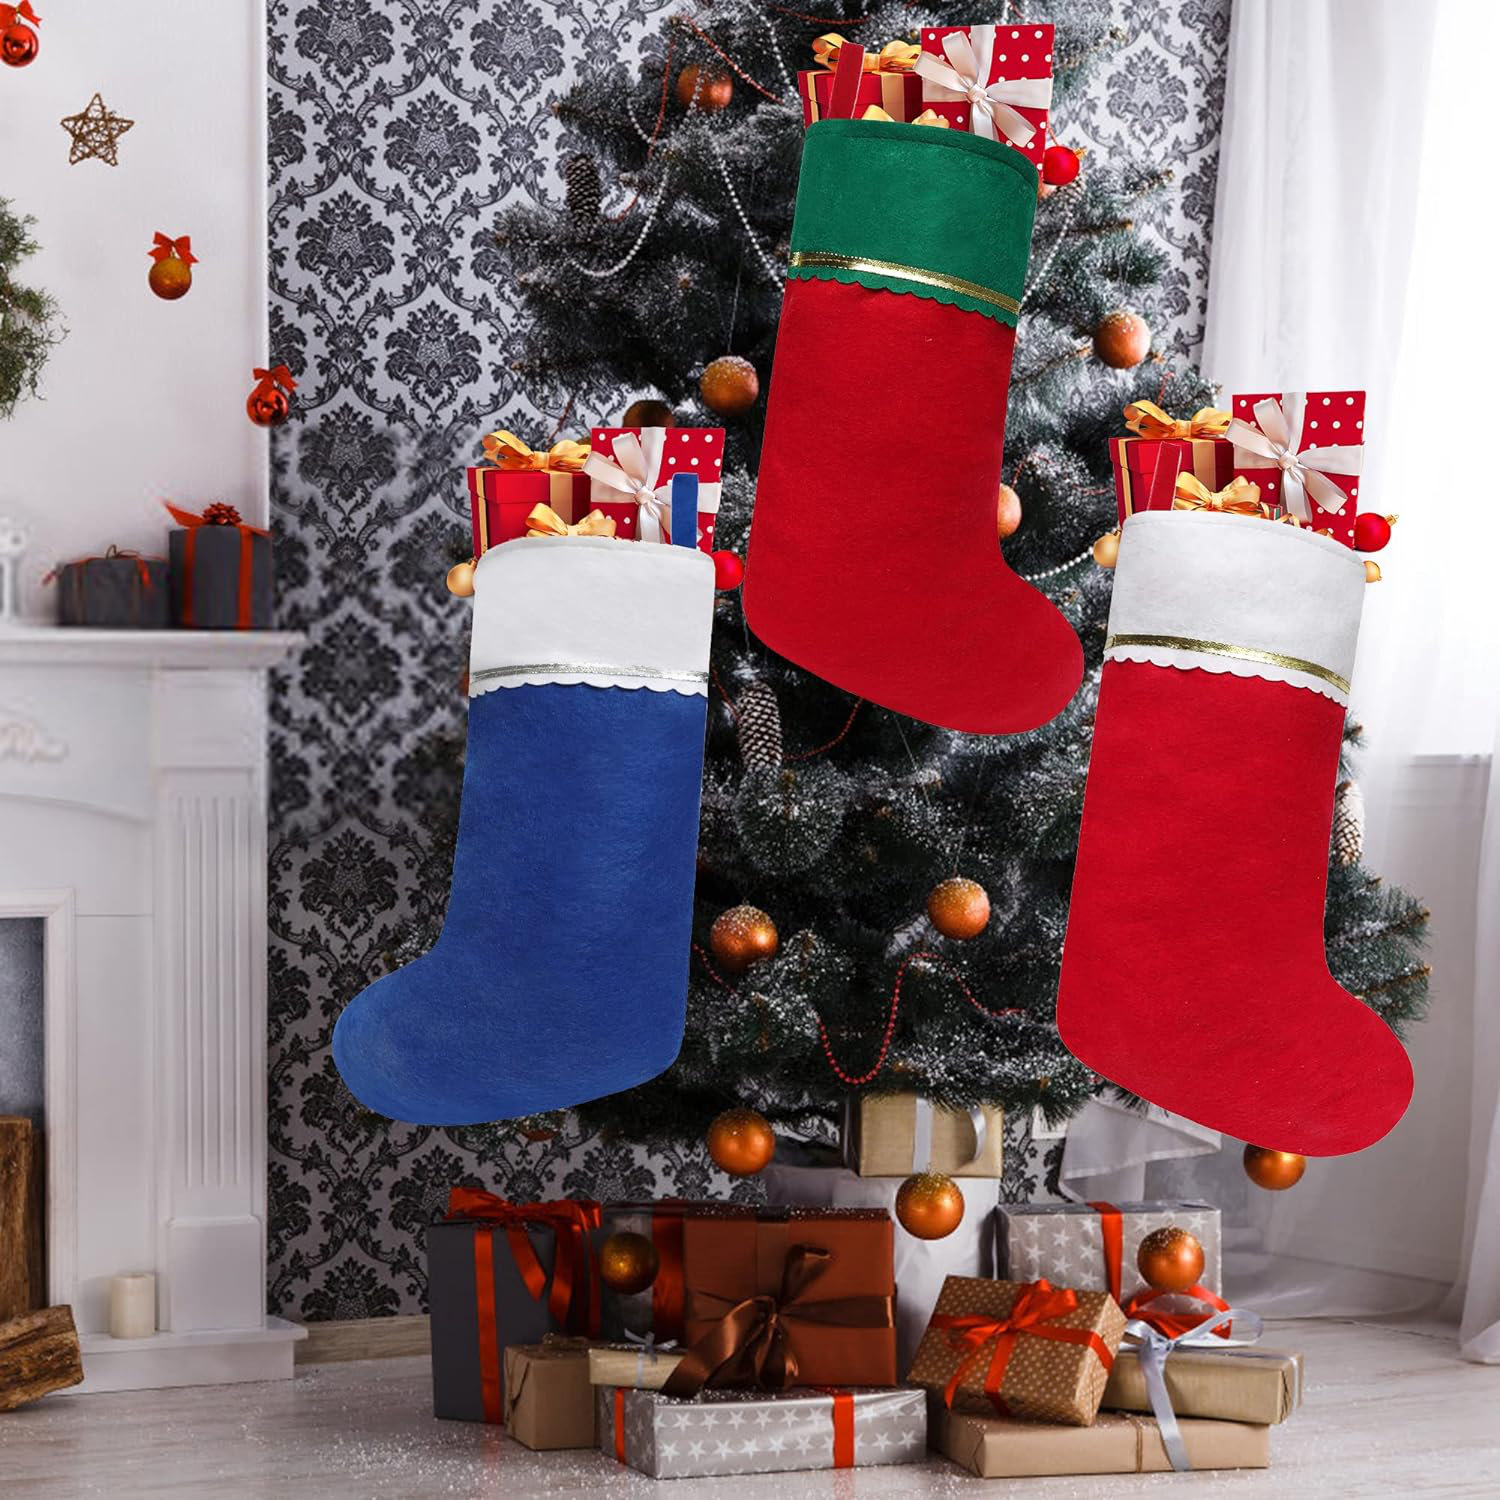 How to Make Felt Christmas Stockings with Stars